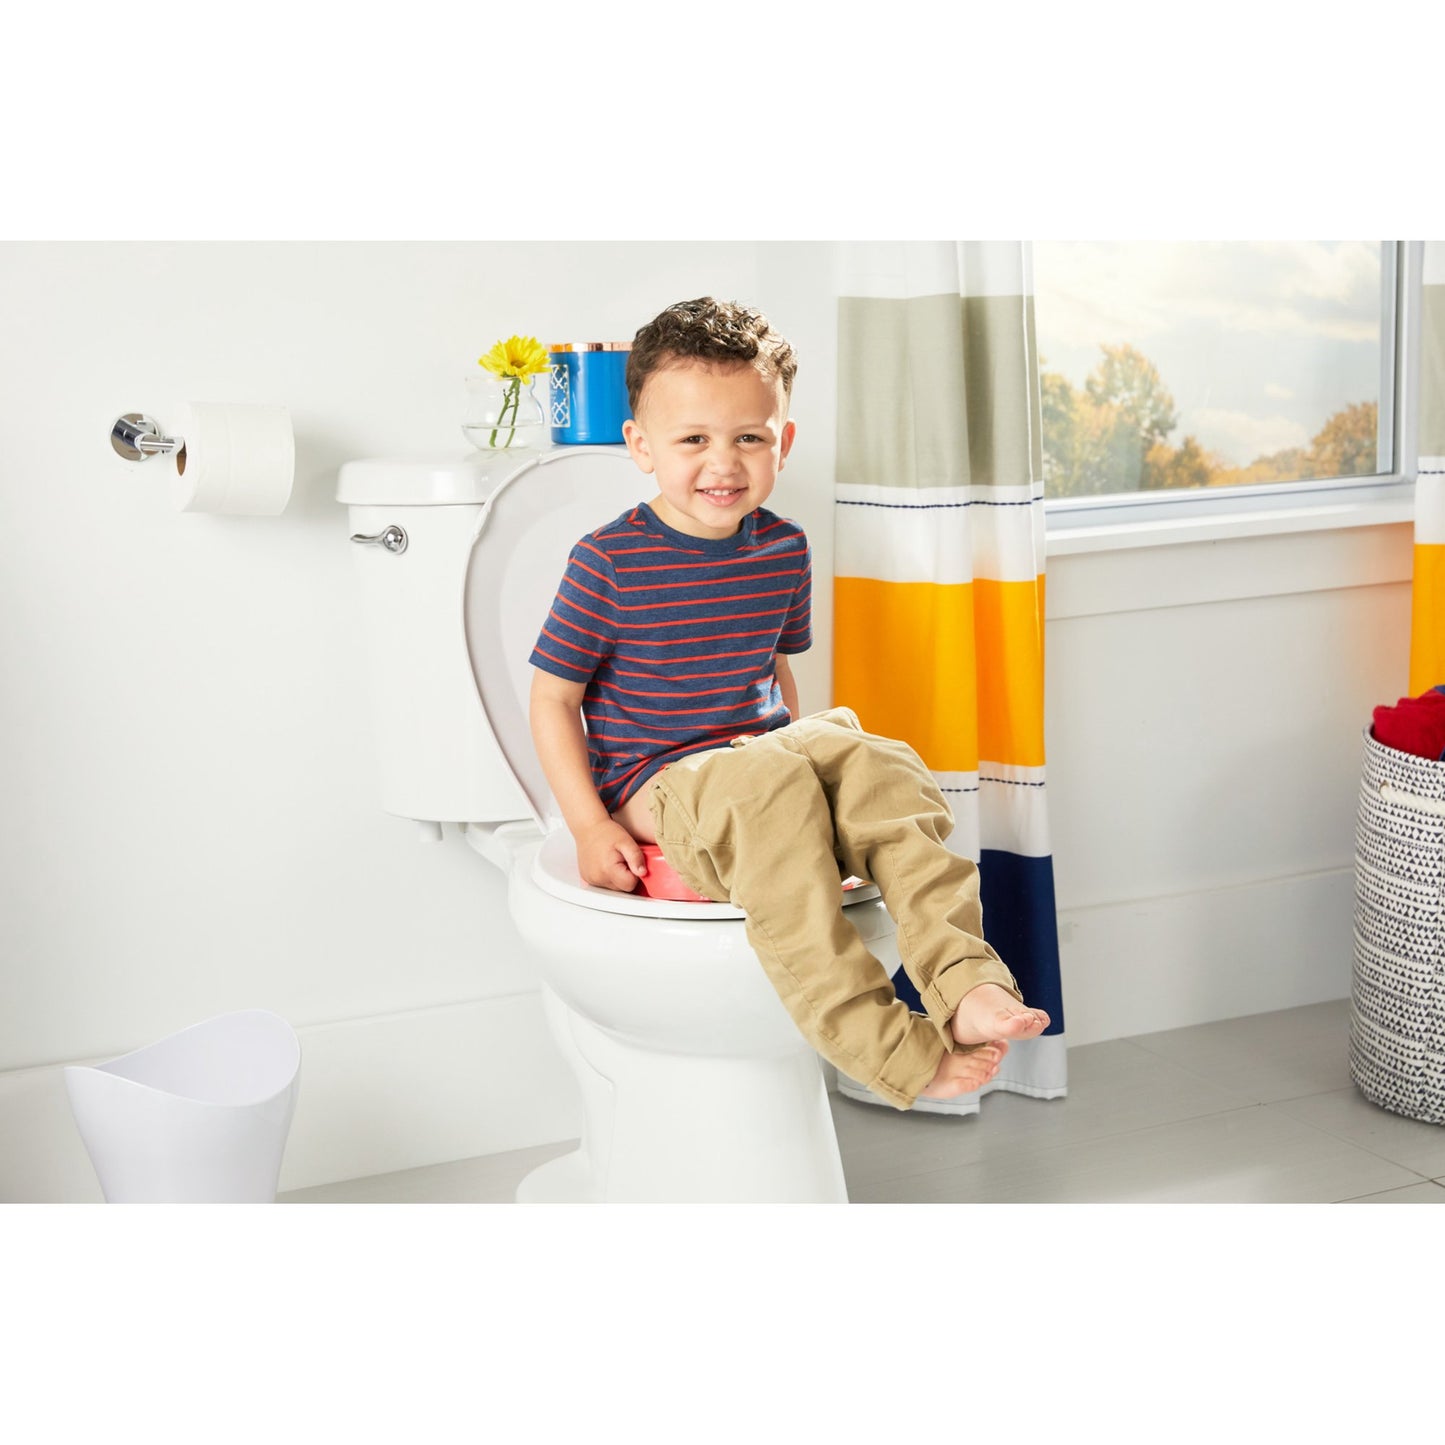 Nickelodeon Paw Patrol 3-in-1 Potty Training Toilet, Toddler Toilet Training Set